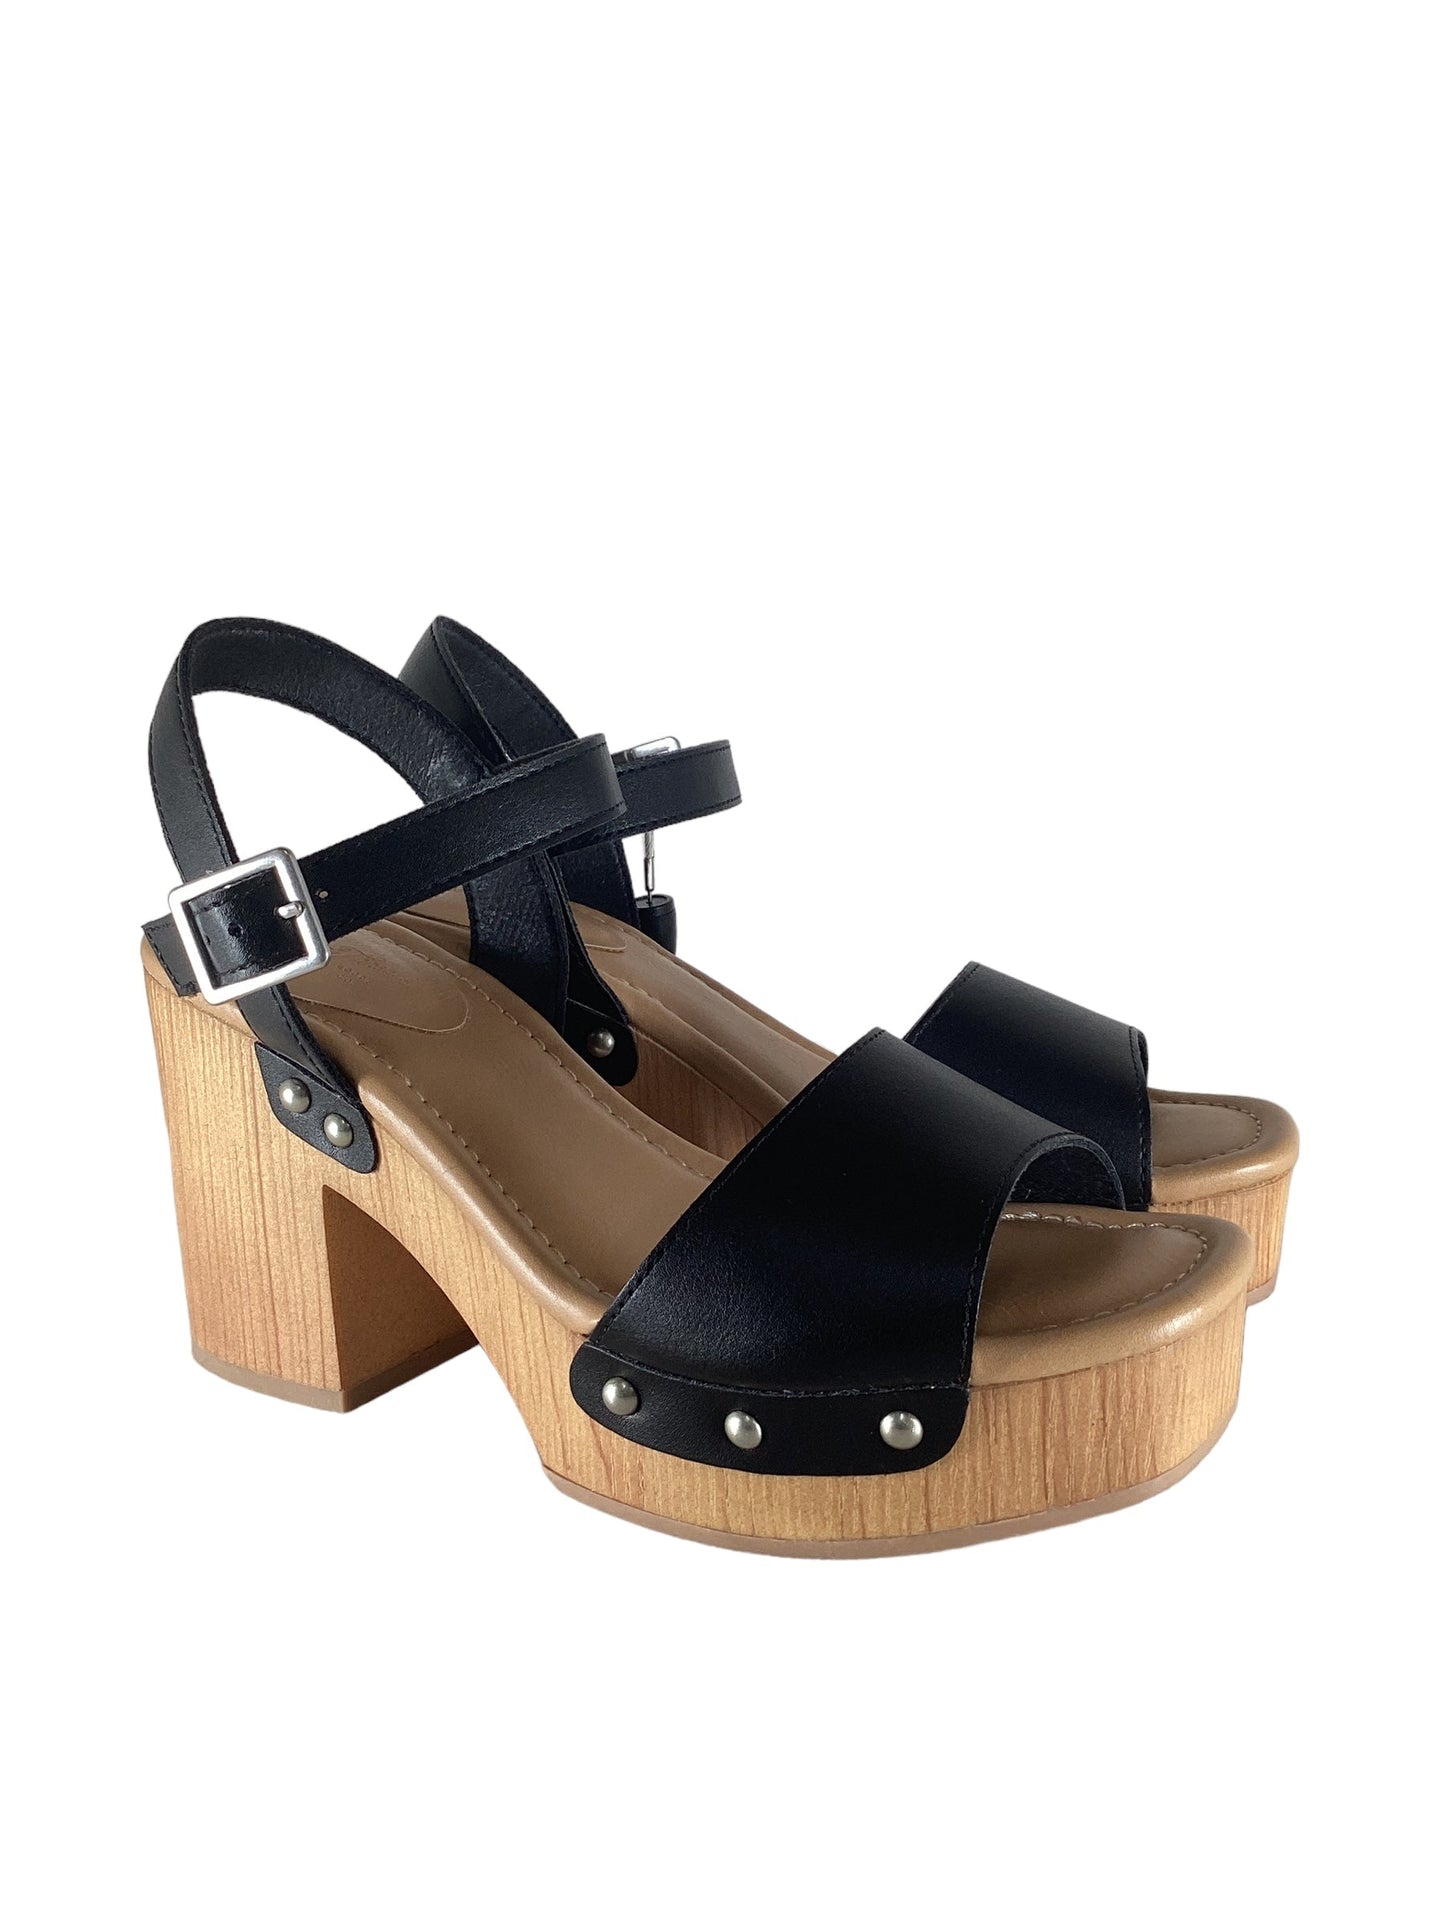 Black Sandals Heels Block Universal Thread, Size 6